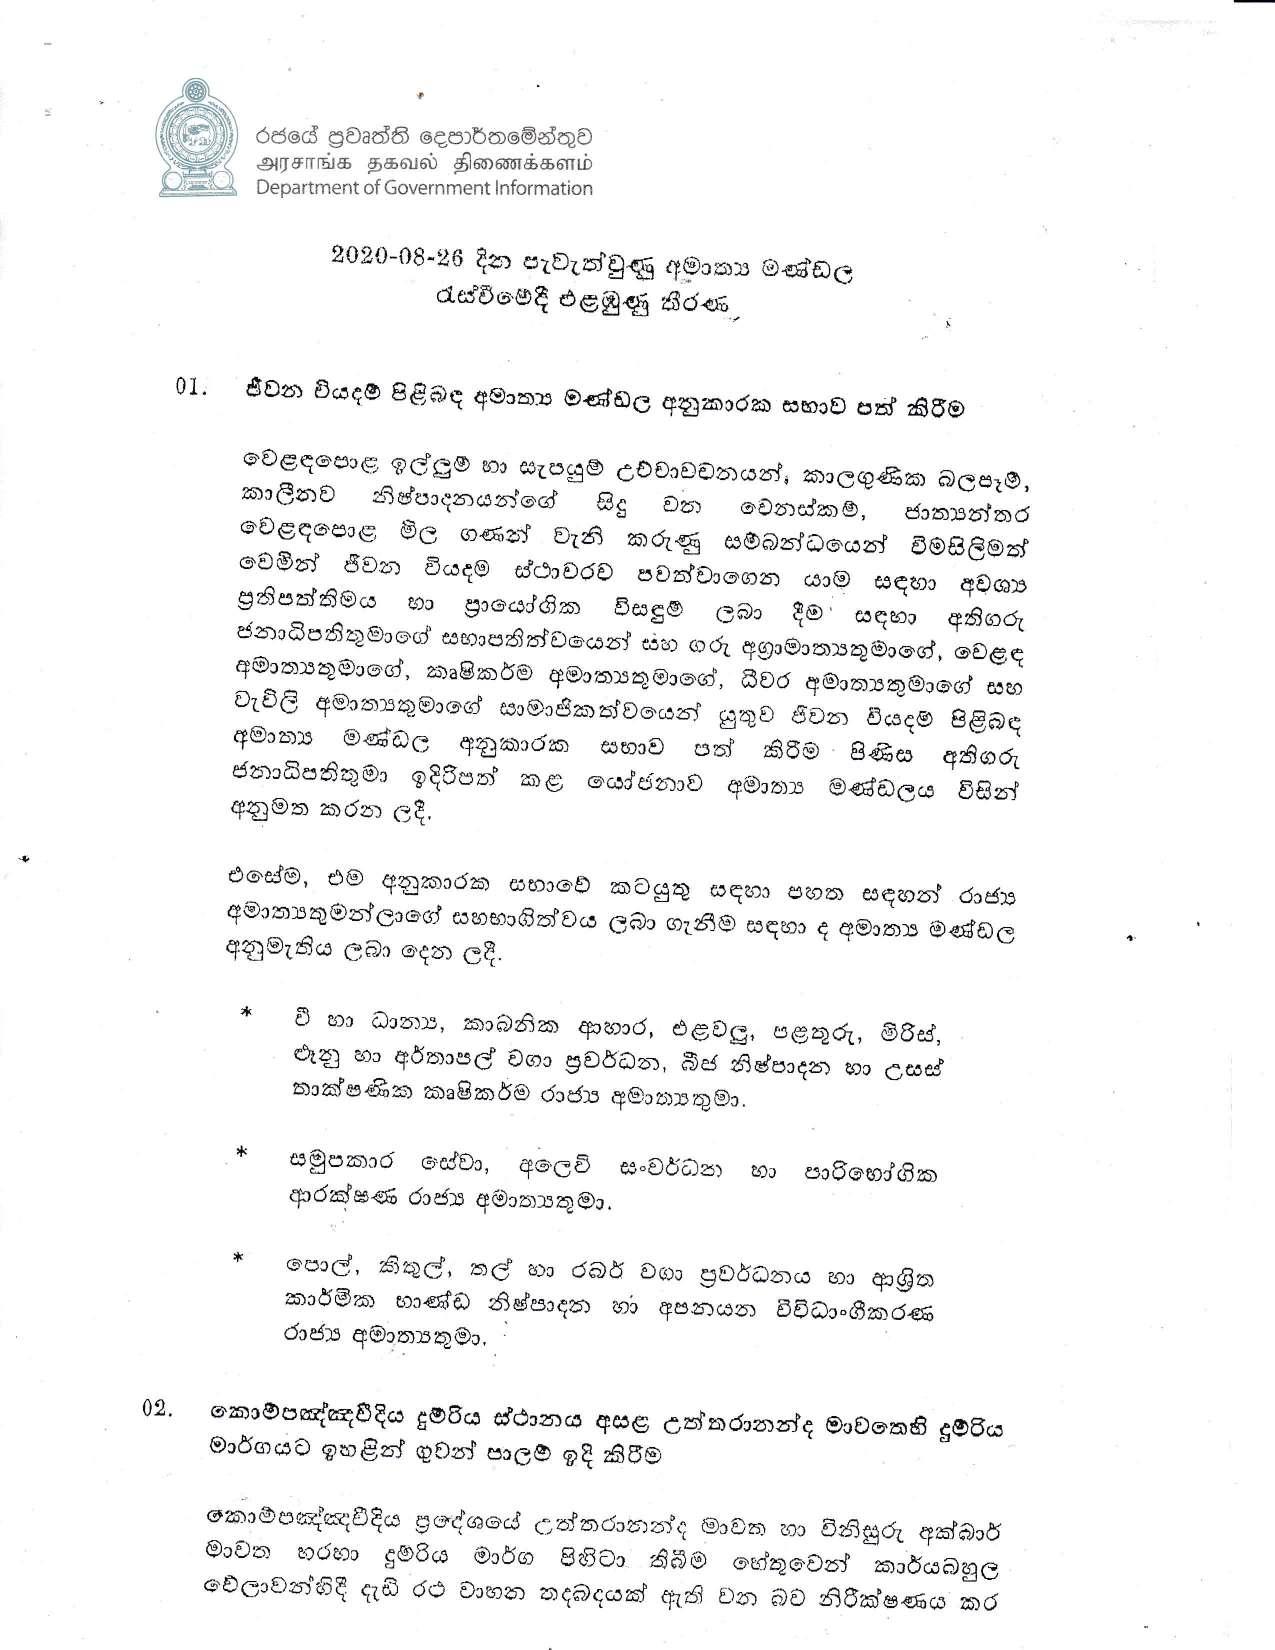 cabinet decision Sinhala 2020 08 26 compressed page 001